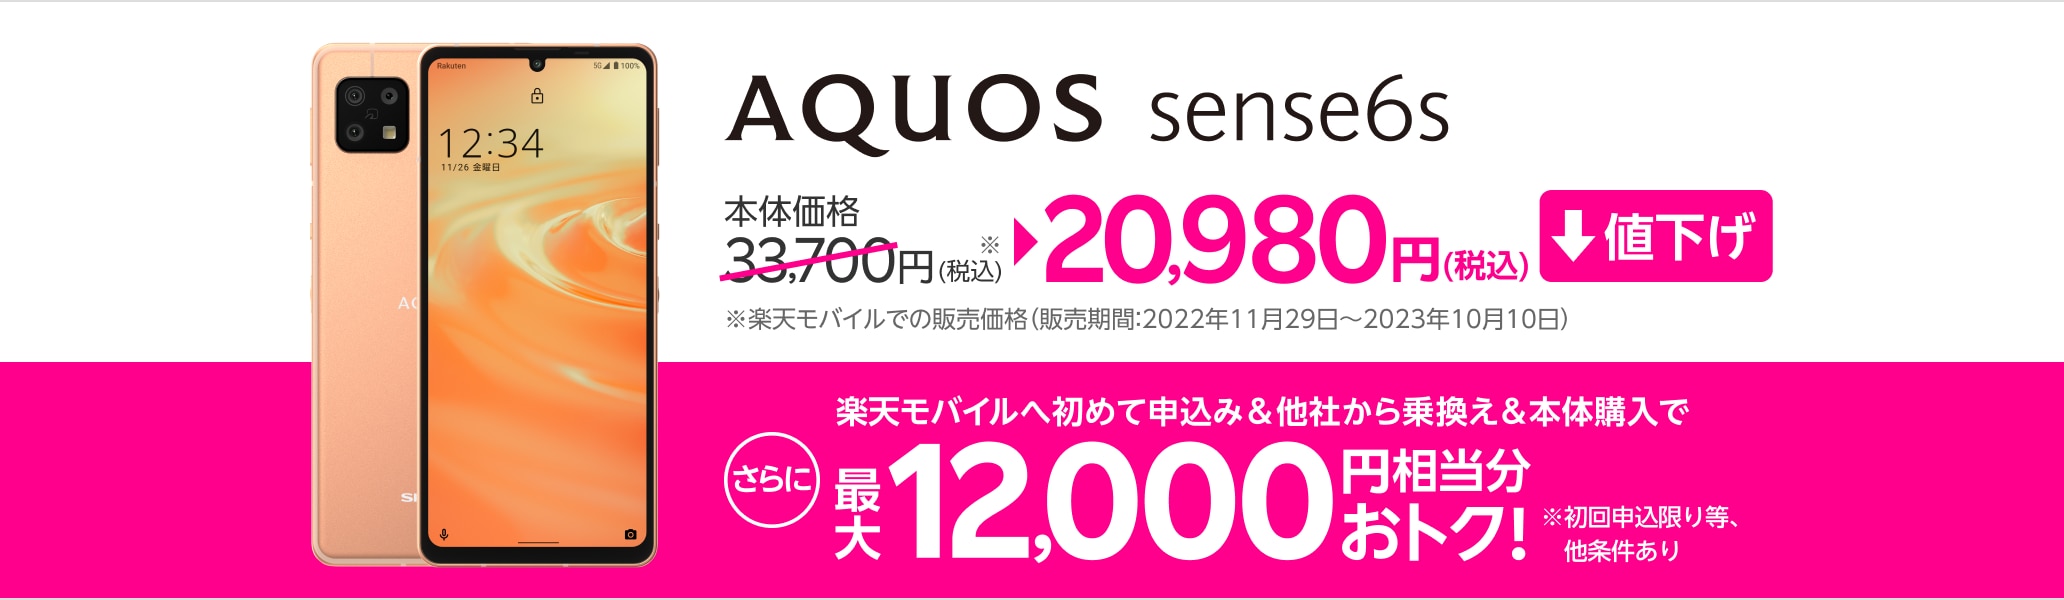 AQUOS sense6sが値下げ。本体価格33,700円※→20,980円（税込） ※楽天モバイルでの販売価格（2022年11月29日～2023年10月10日）